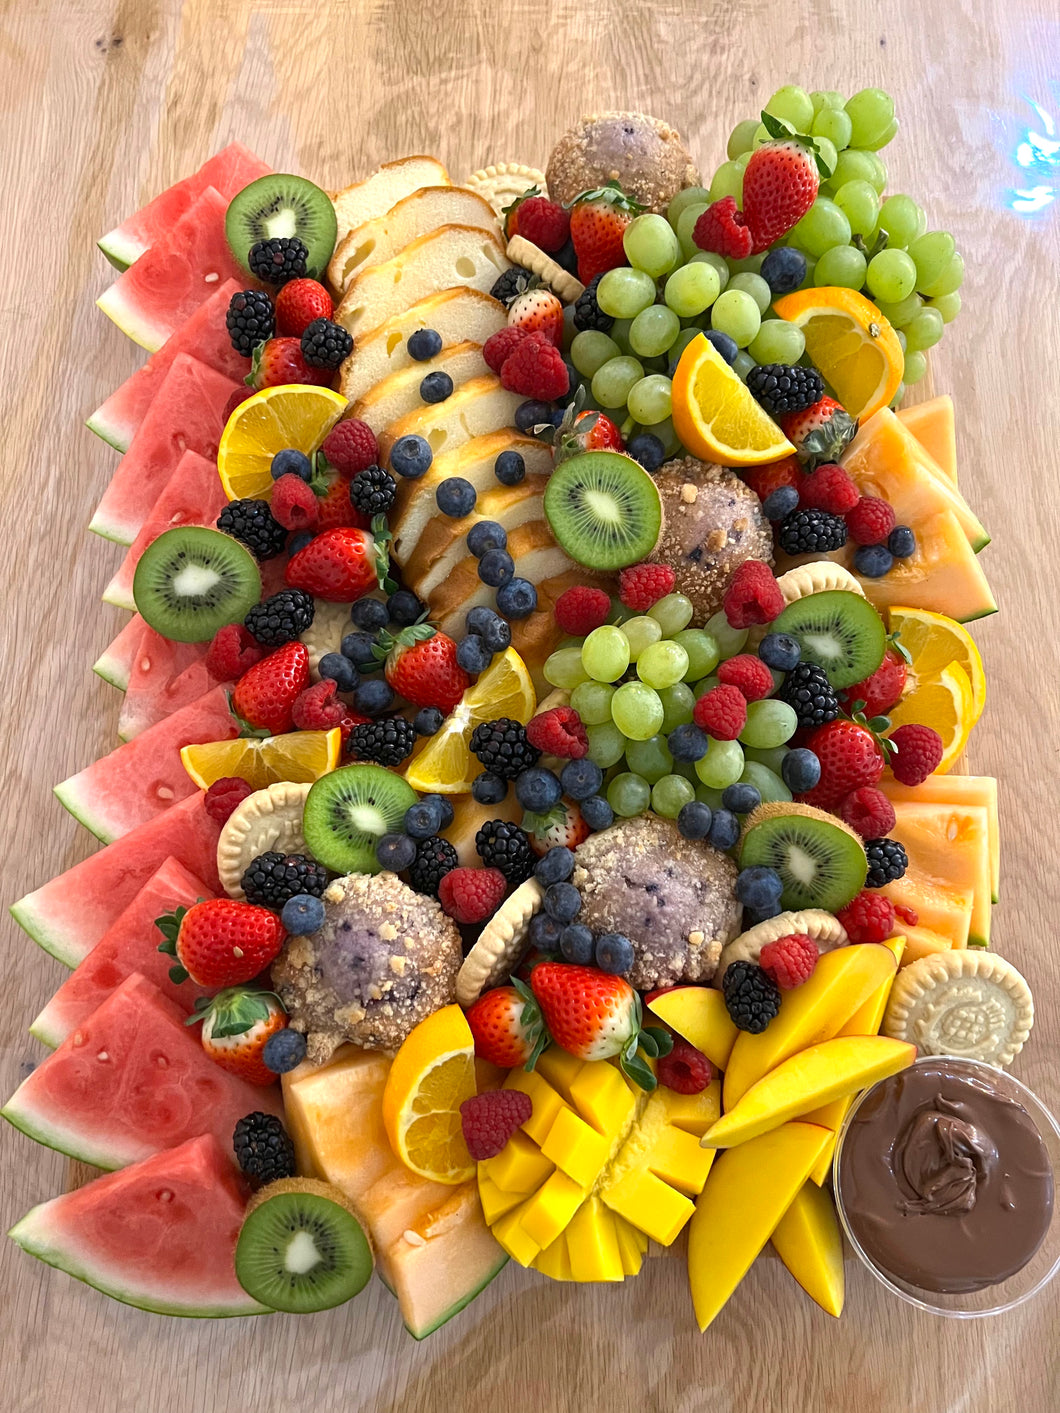 corporate catering, catering, fruit arrangements, fresh fruits, kiwi, mango, fruit salad